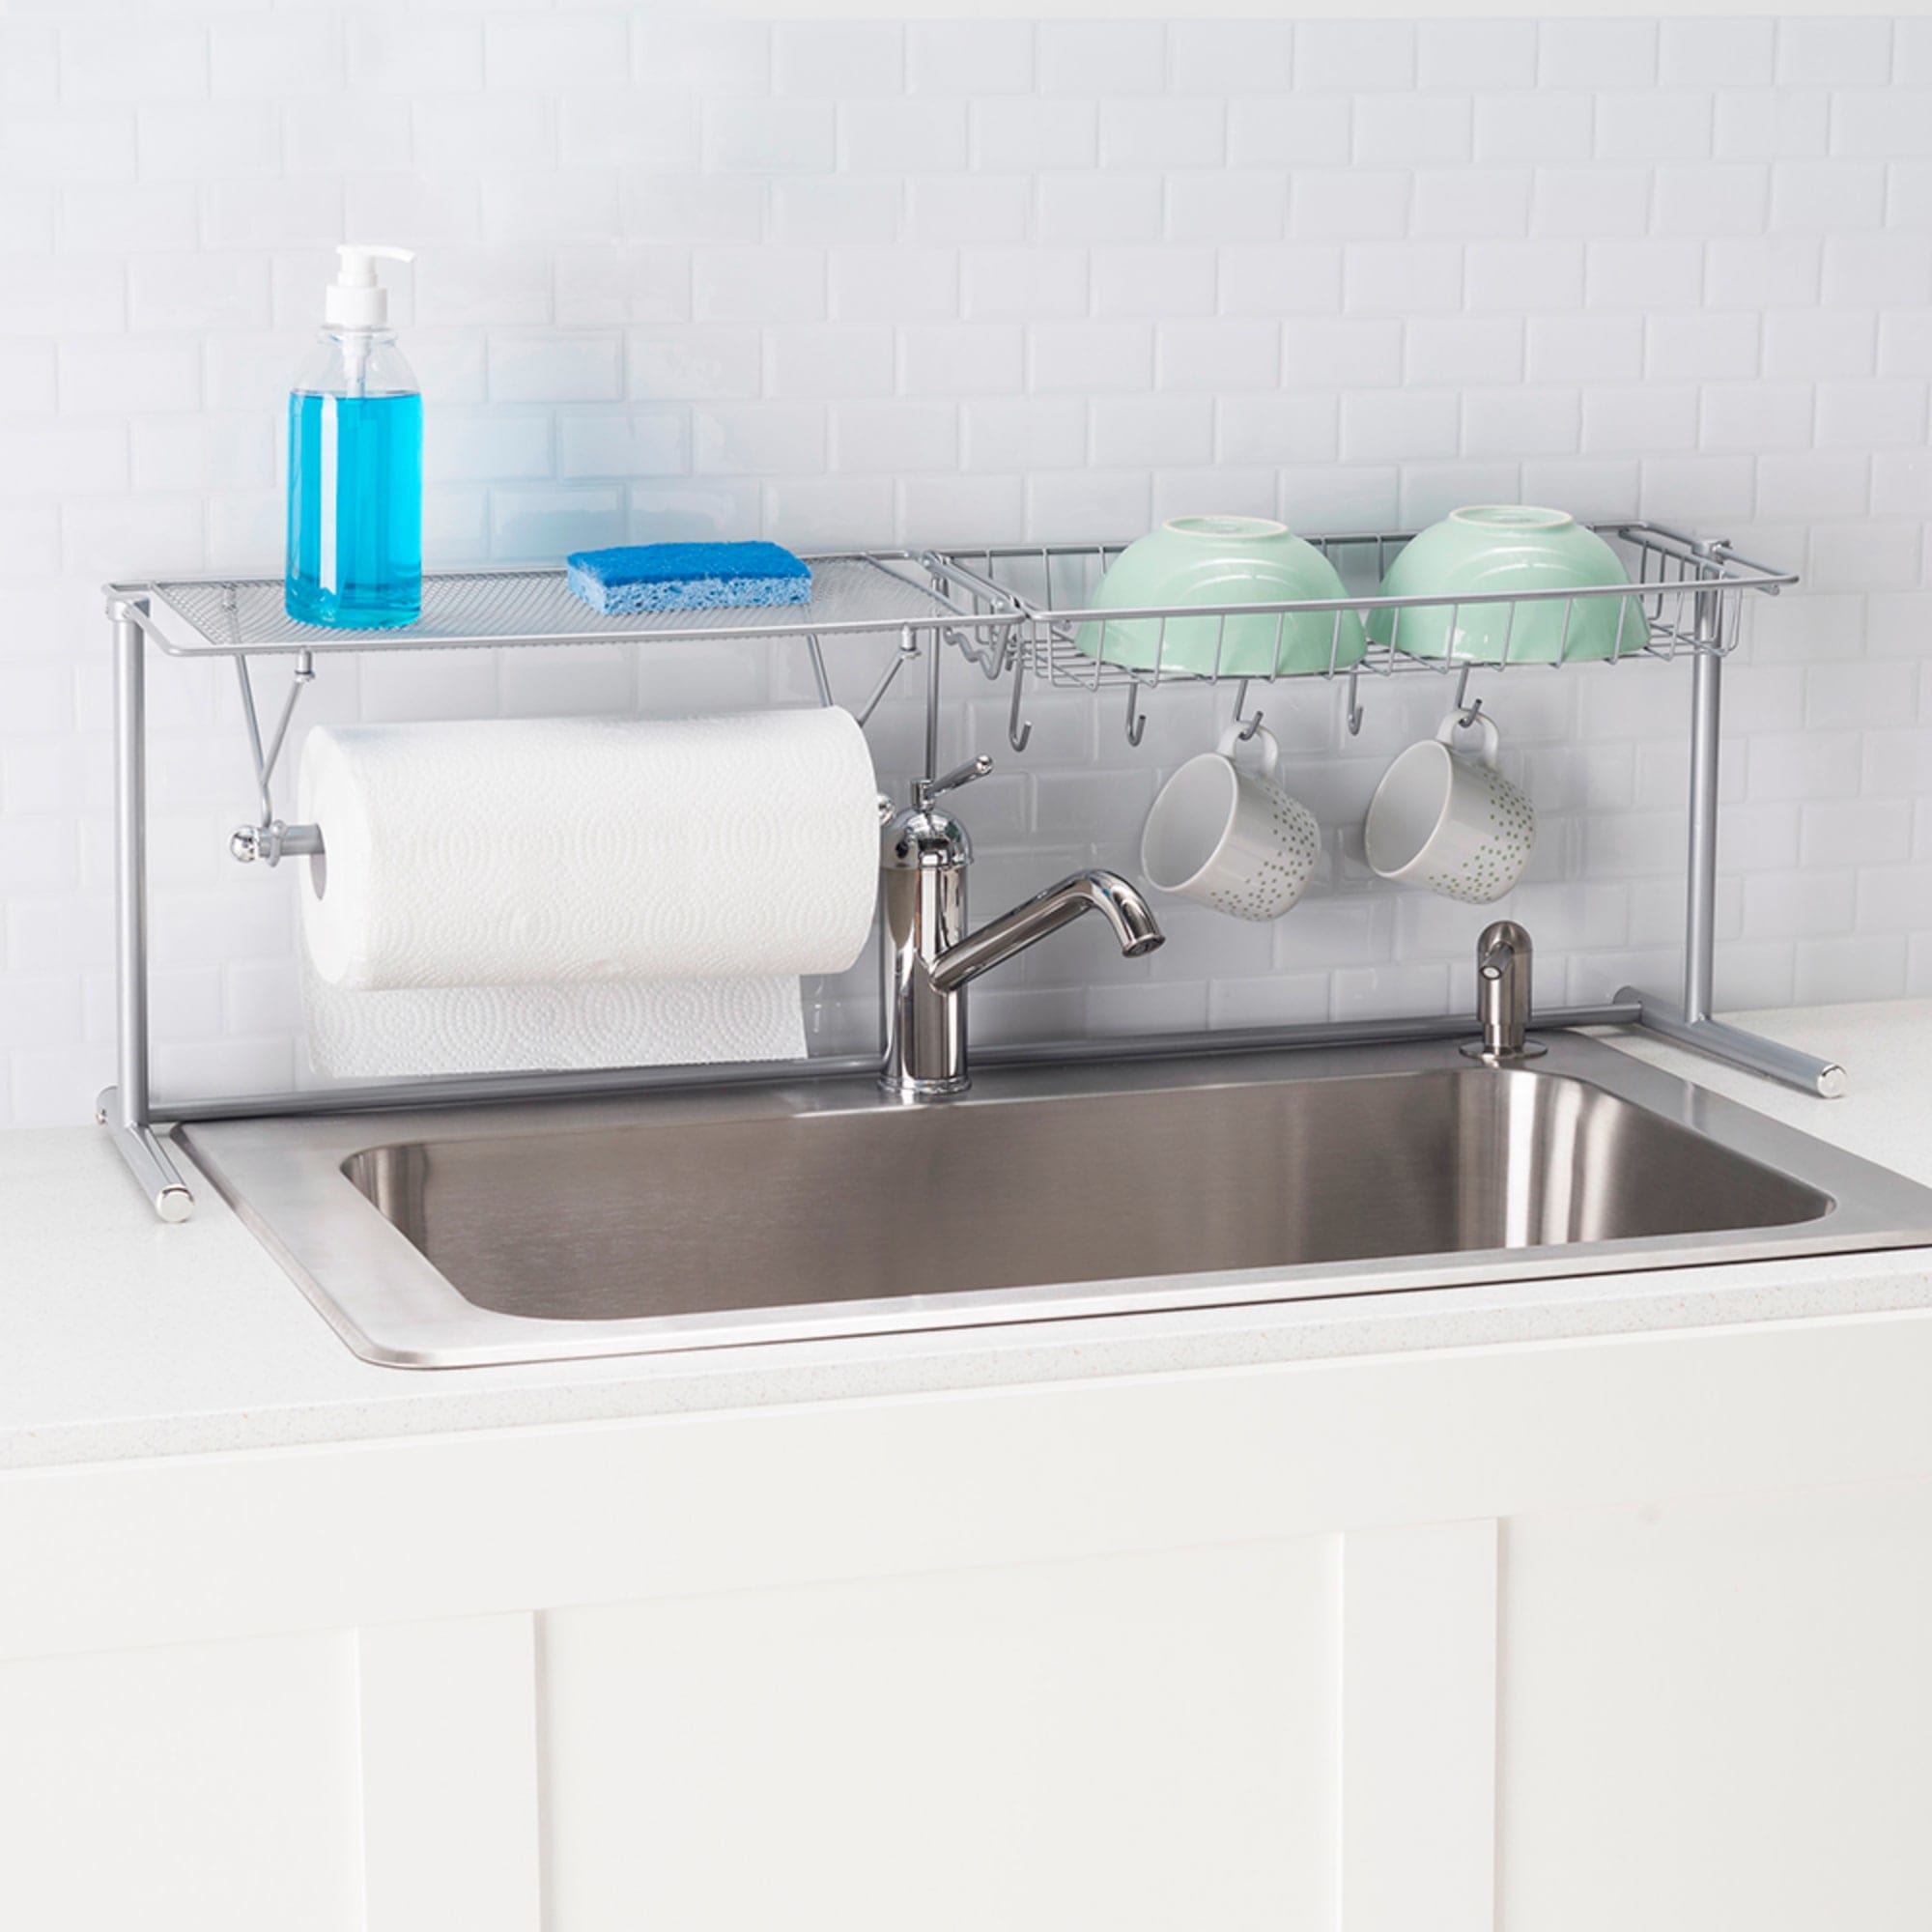 Home Basics Over the Sink Counter Kitchen Station, Chrome, KITCHEN  ORGANIZATION